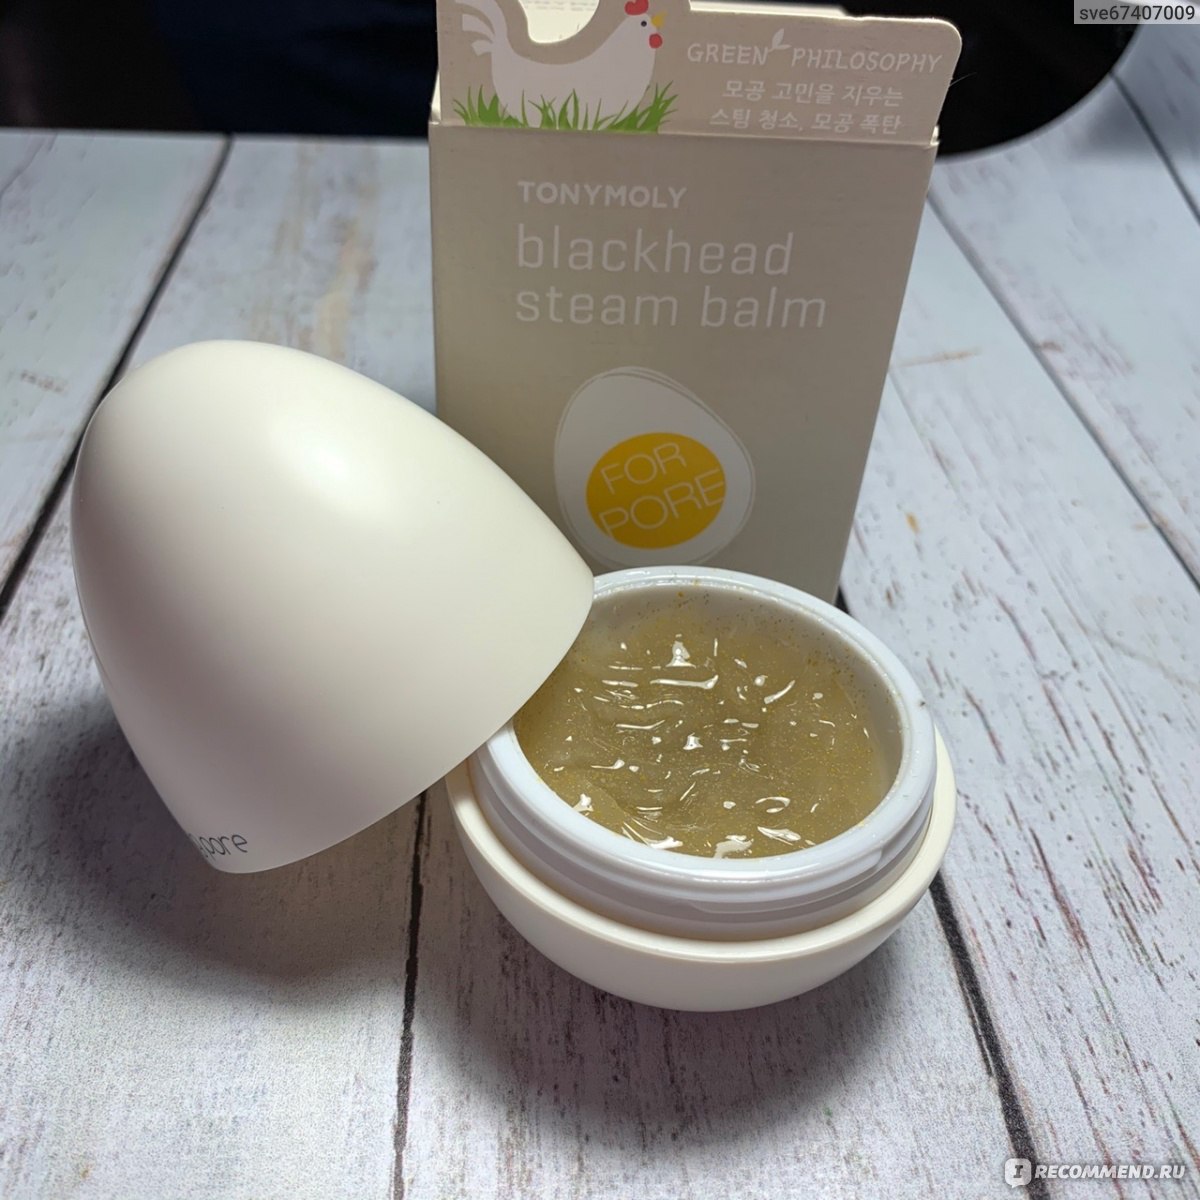 Blackhead steam balm egg pore как пользоваться фото 35